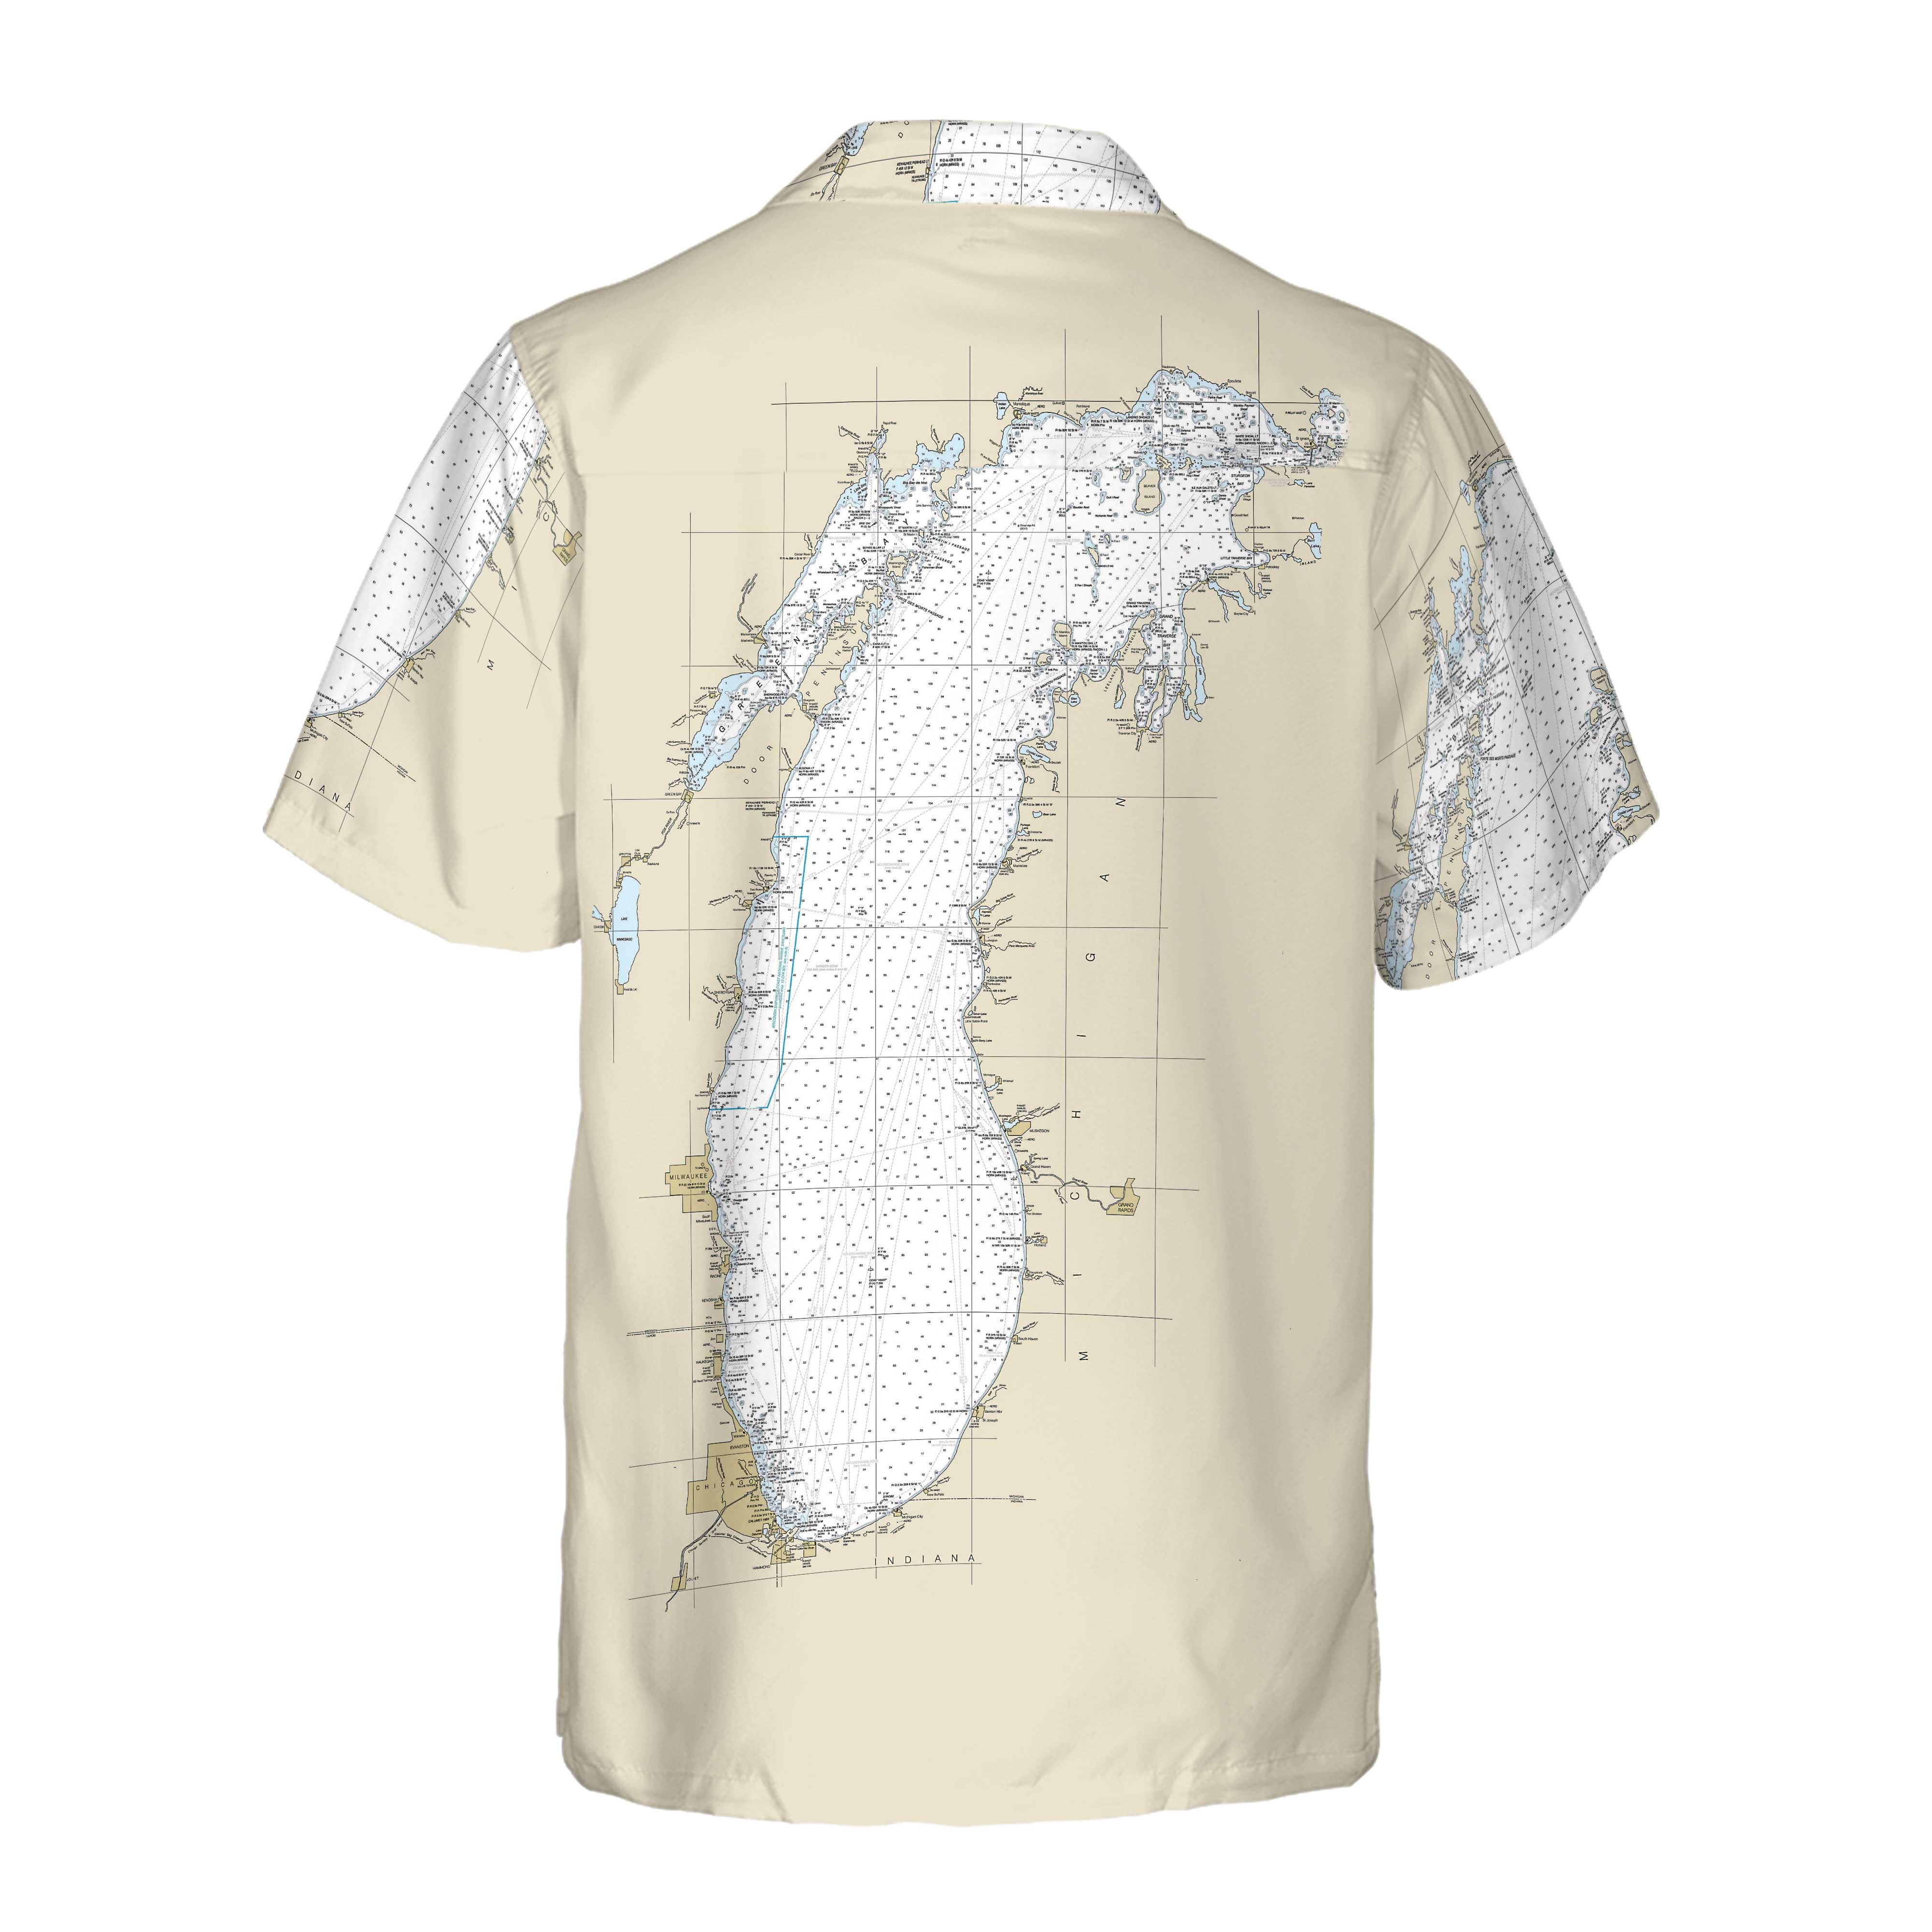 The Lake Michigan Navigator Coconut Button Camp Shirt